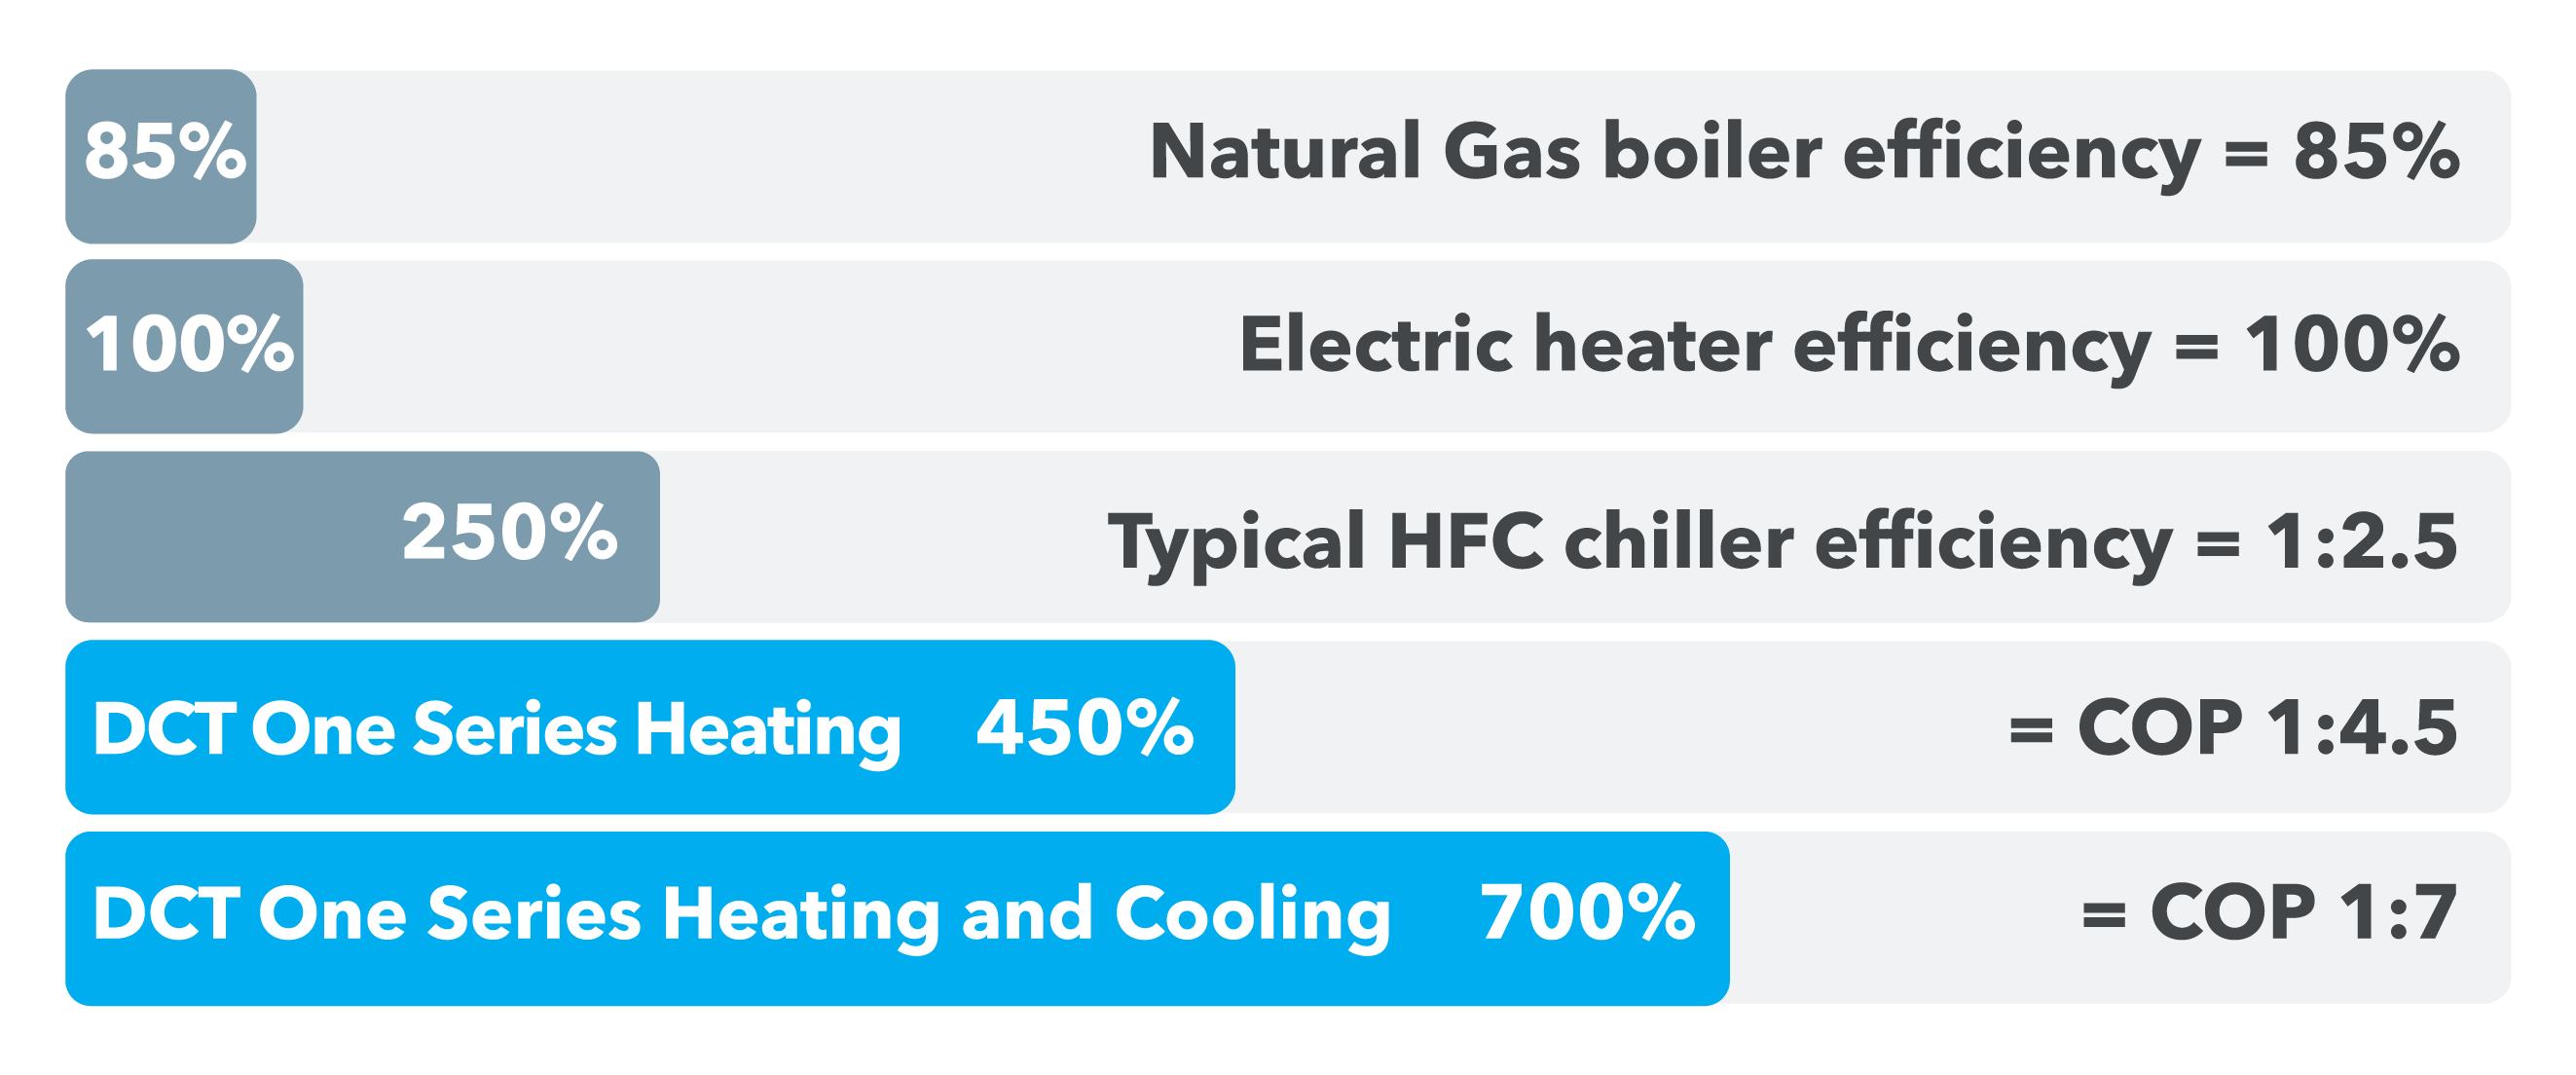 Dalrada heat pump - heating & cooling COP 1:7